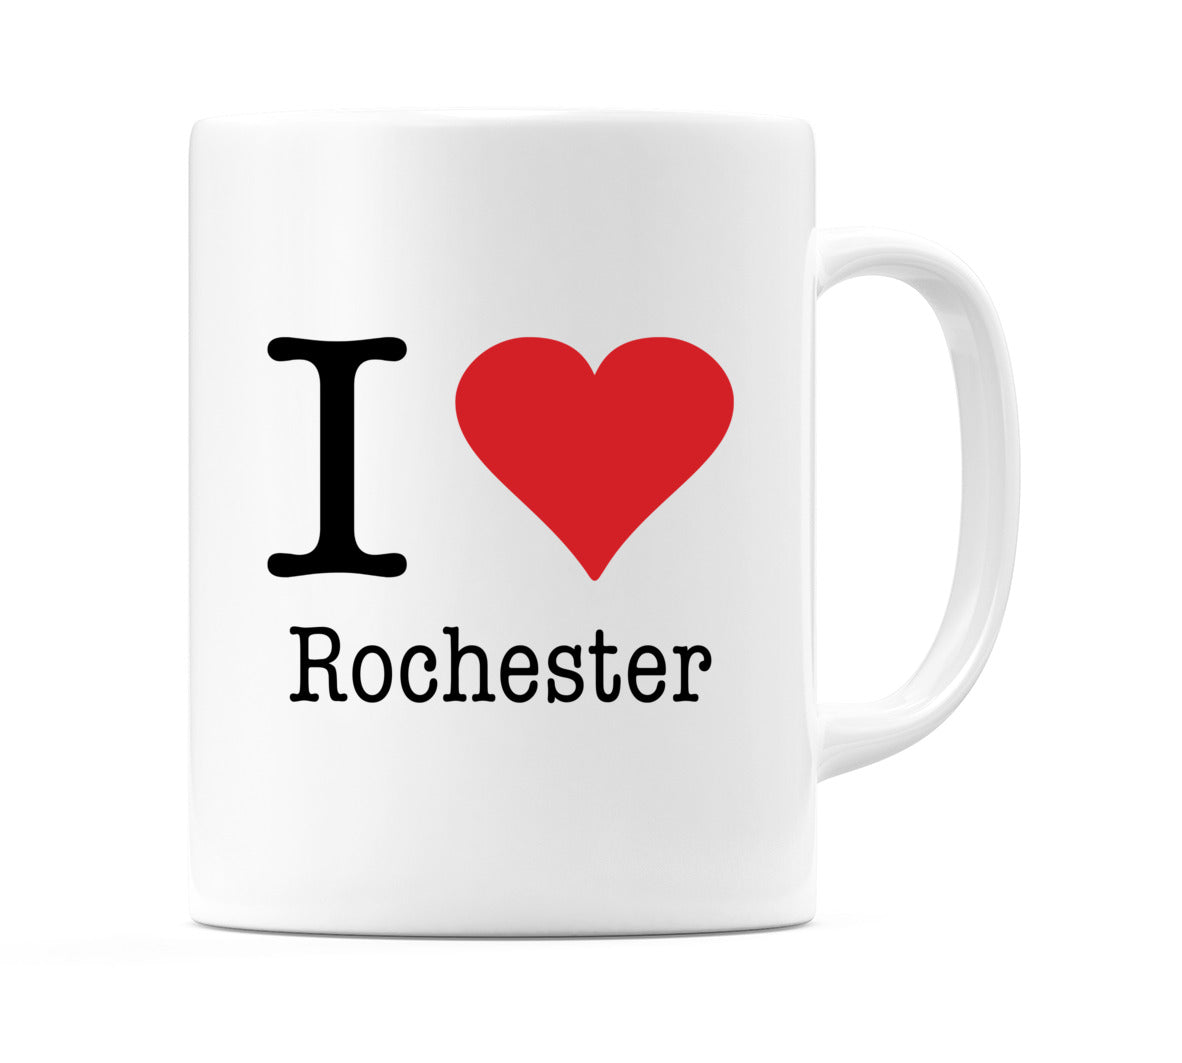 I Love Rochester Mug